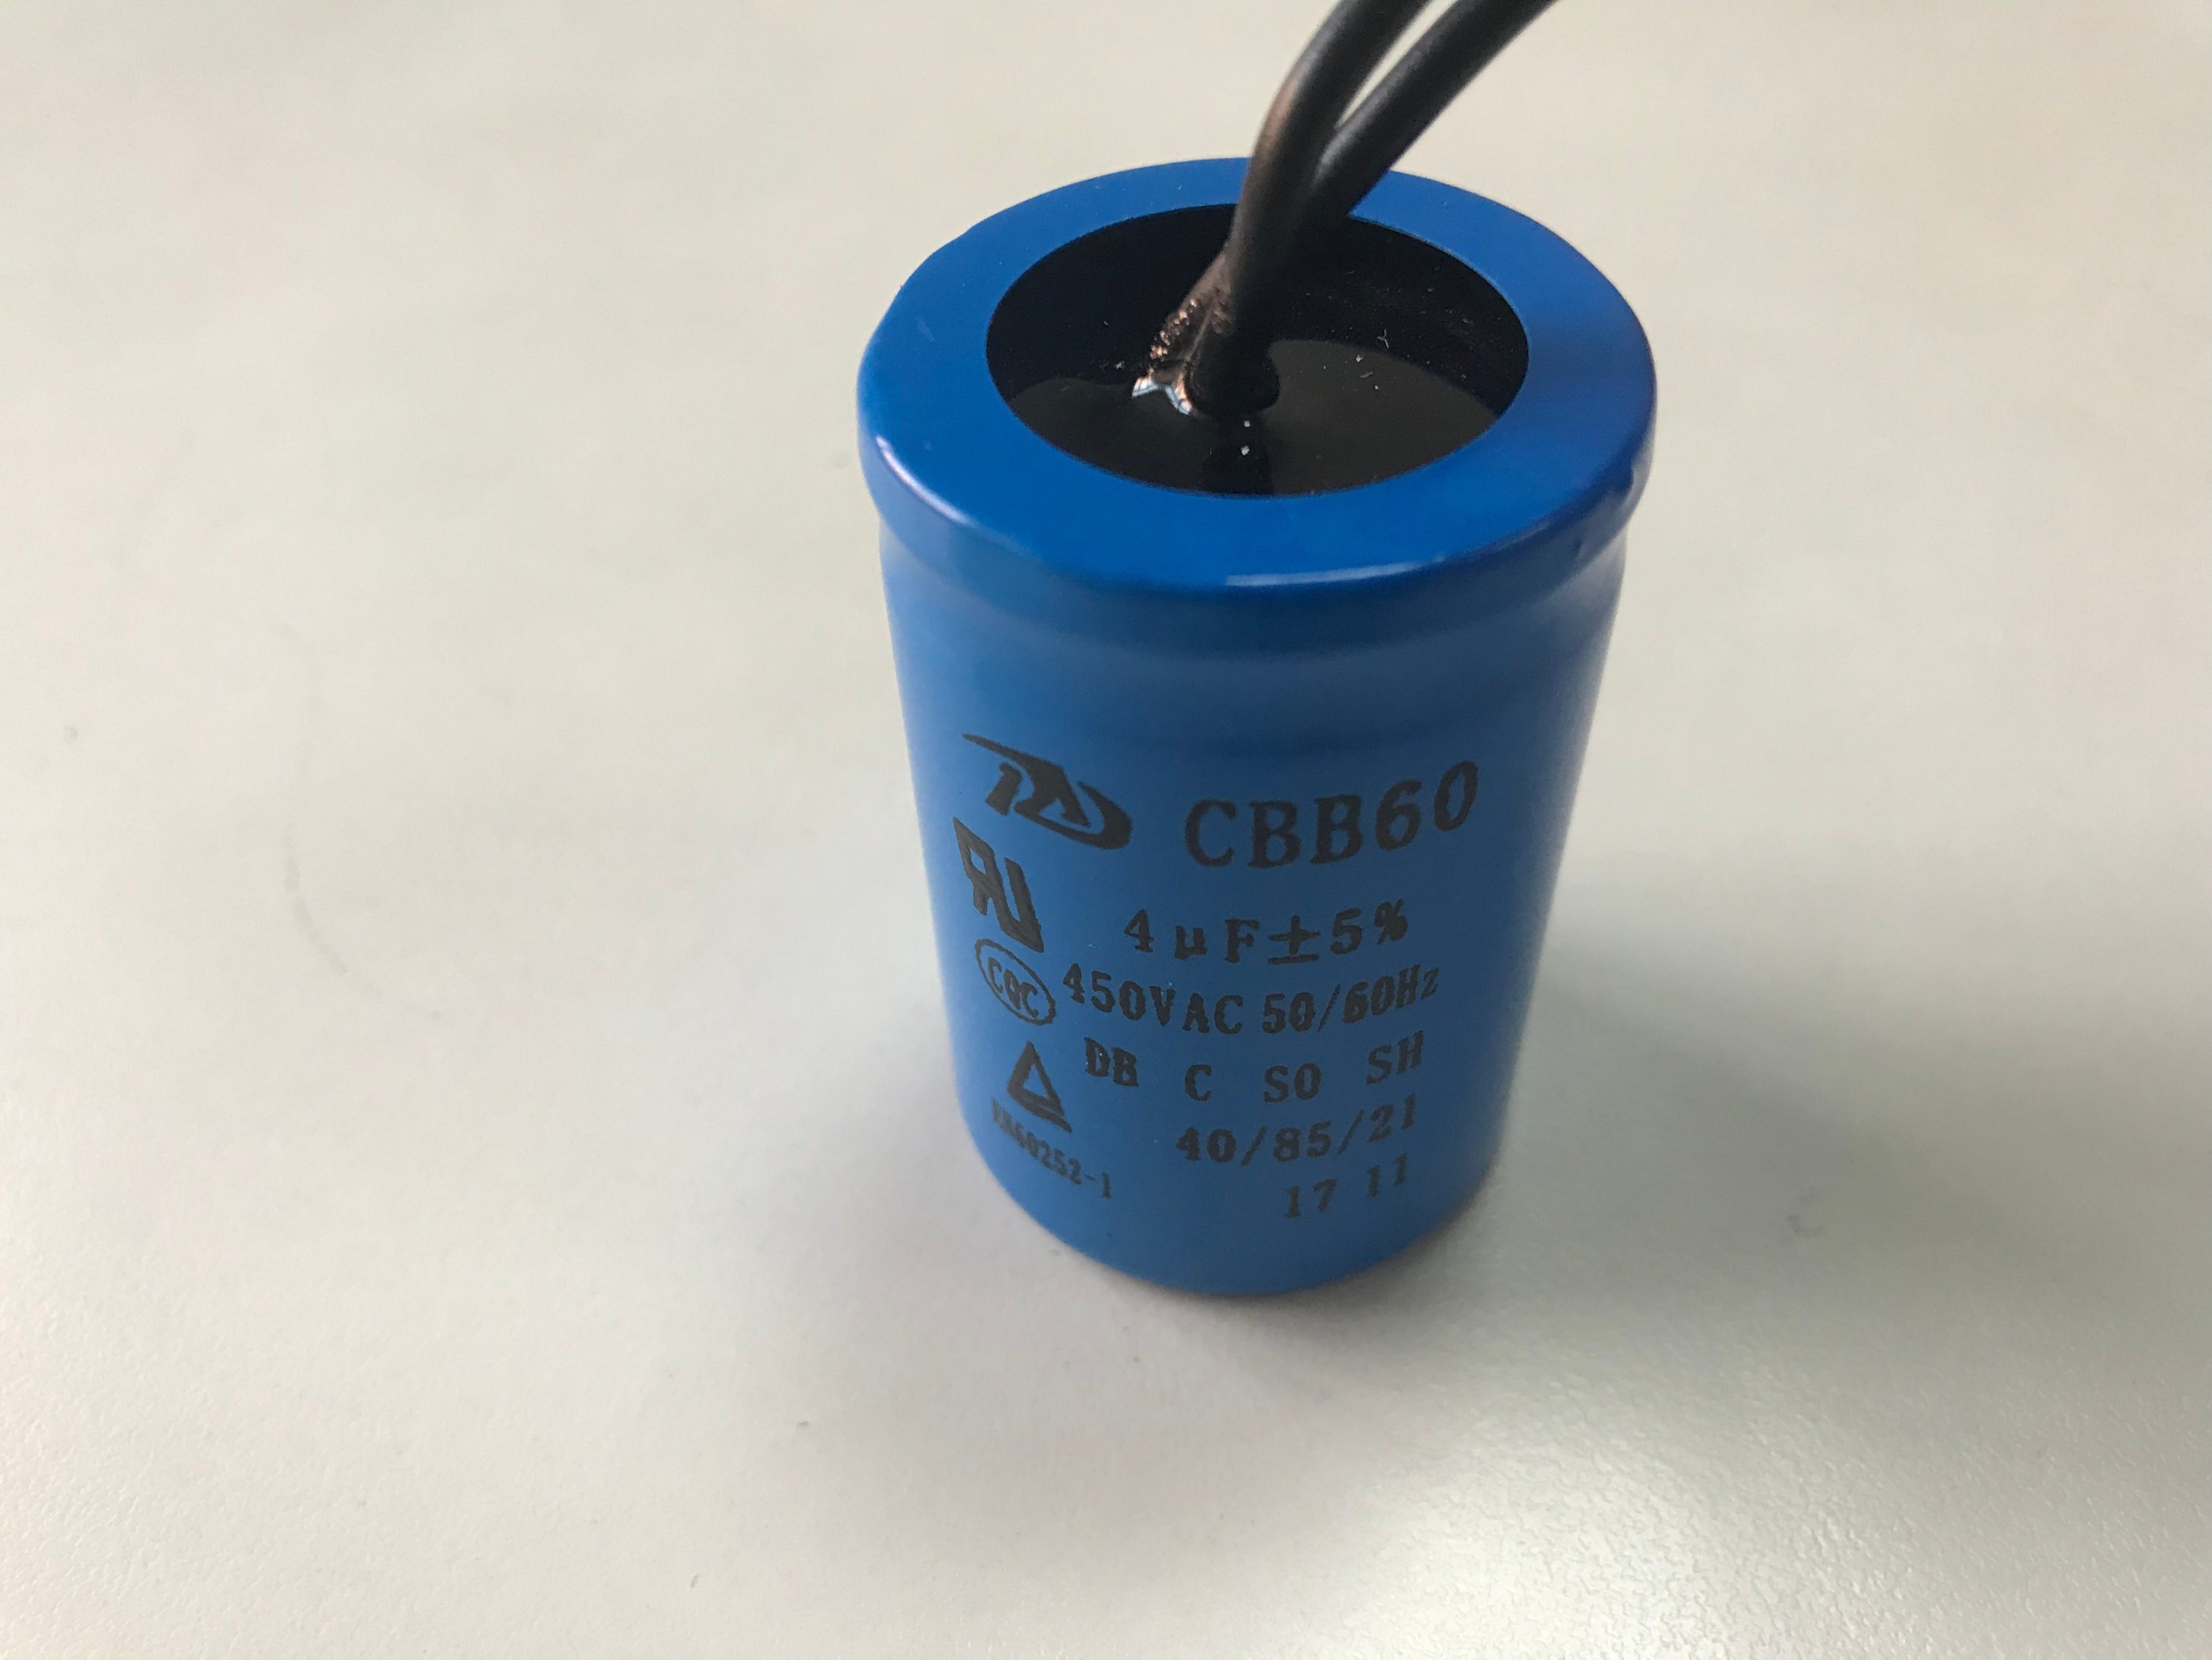 Dehumidifier Film Capacitor Qualifed by UL. TUV. CQC Cbb61